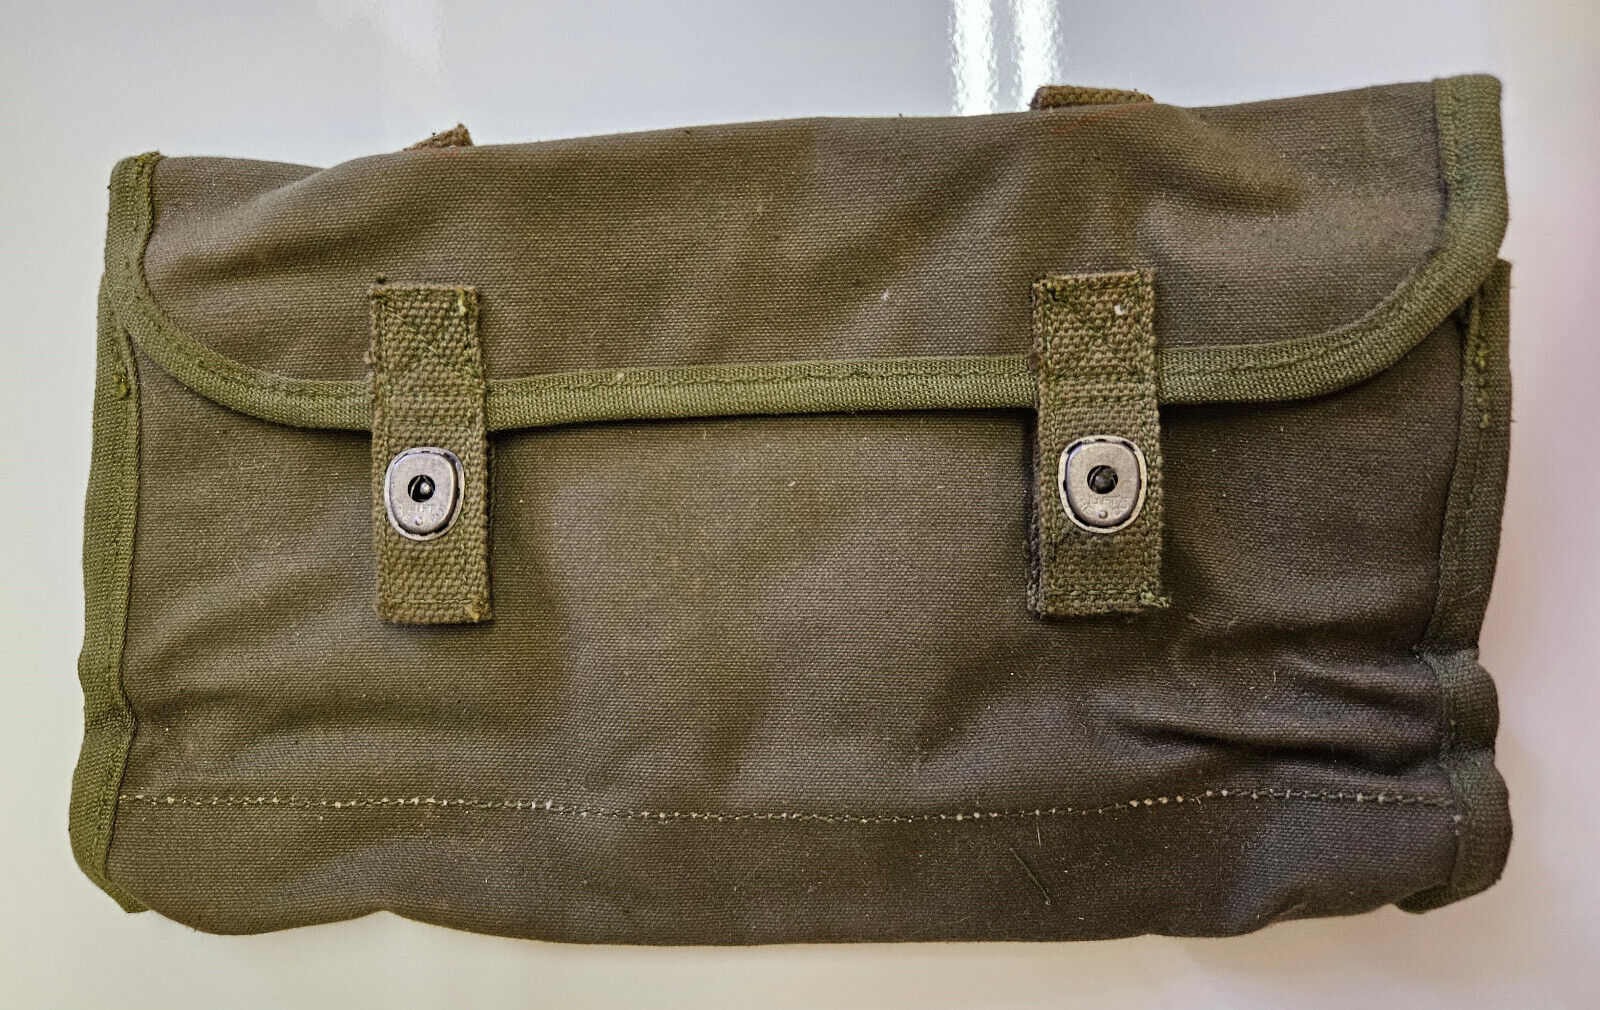 Vintage Canvas Military Bag/Pouch